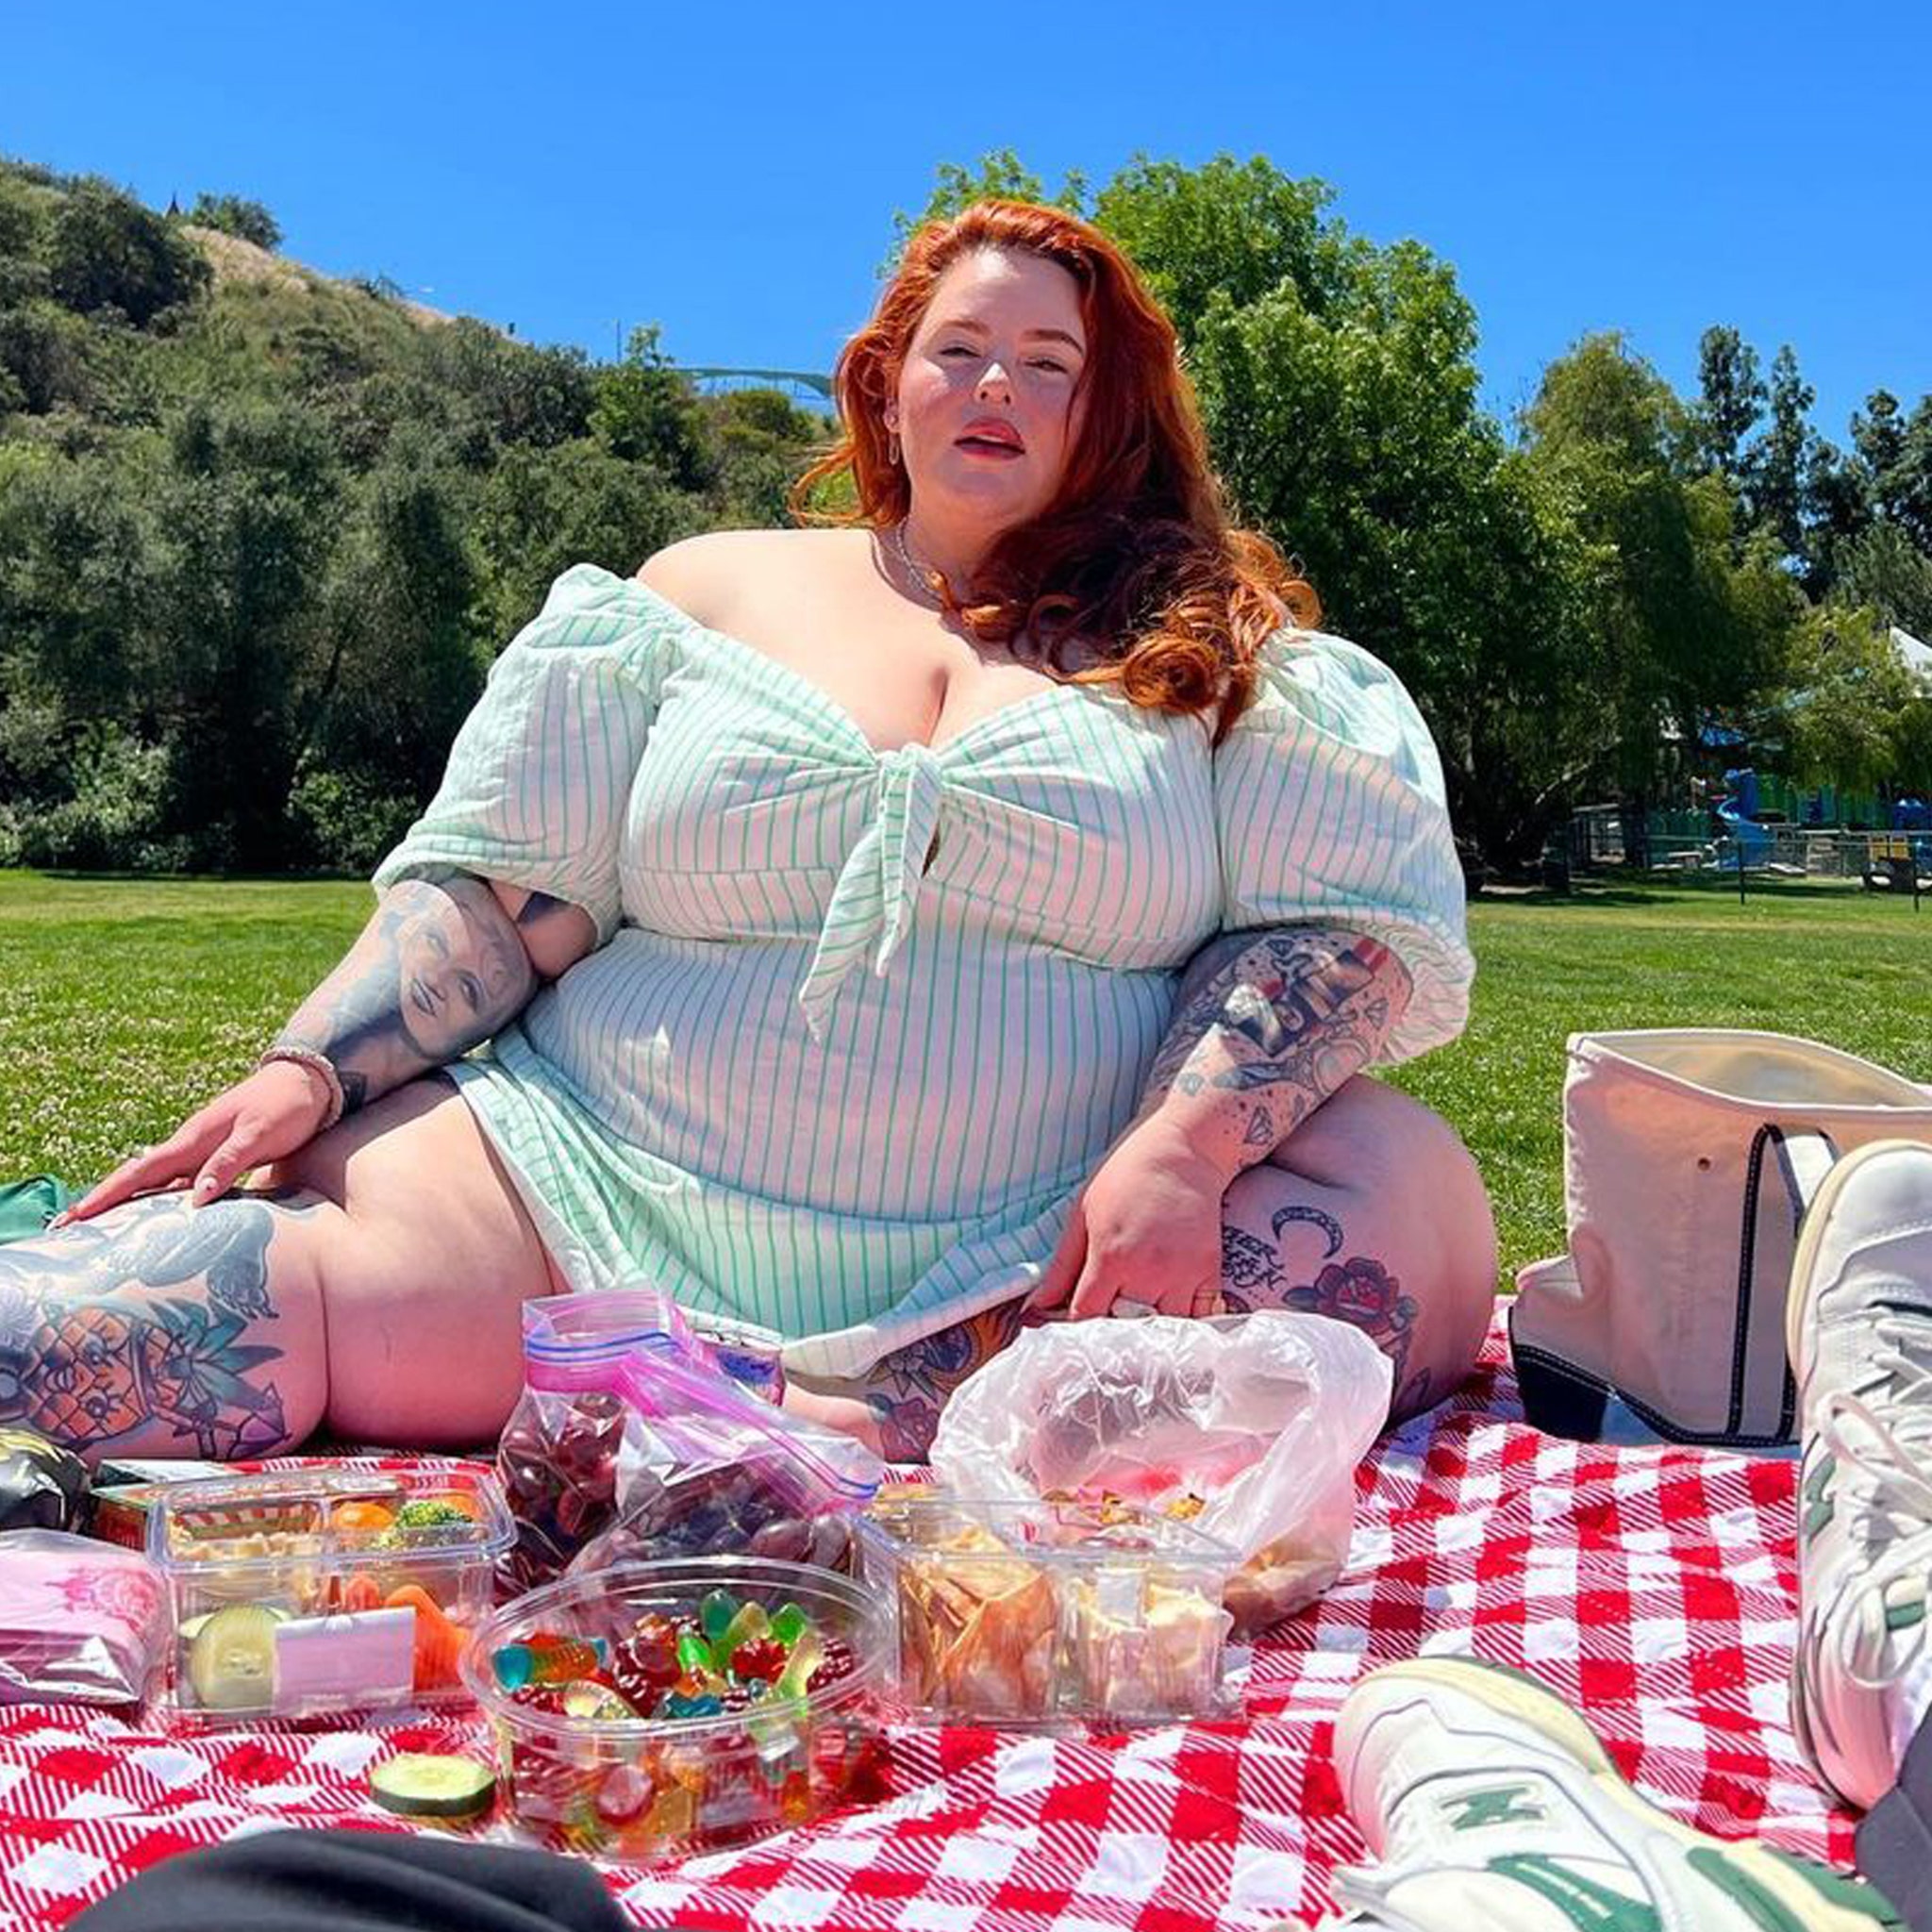 Tess Holliday Calls Out TikToker Who Follows 'Really Big Fat Ppl